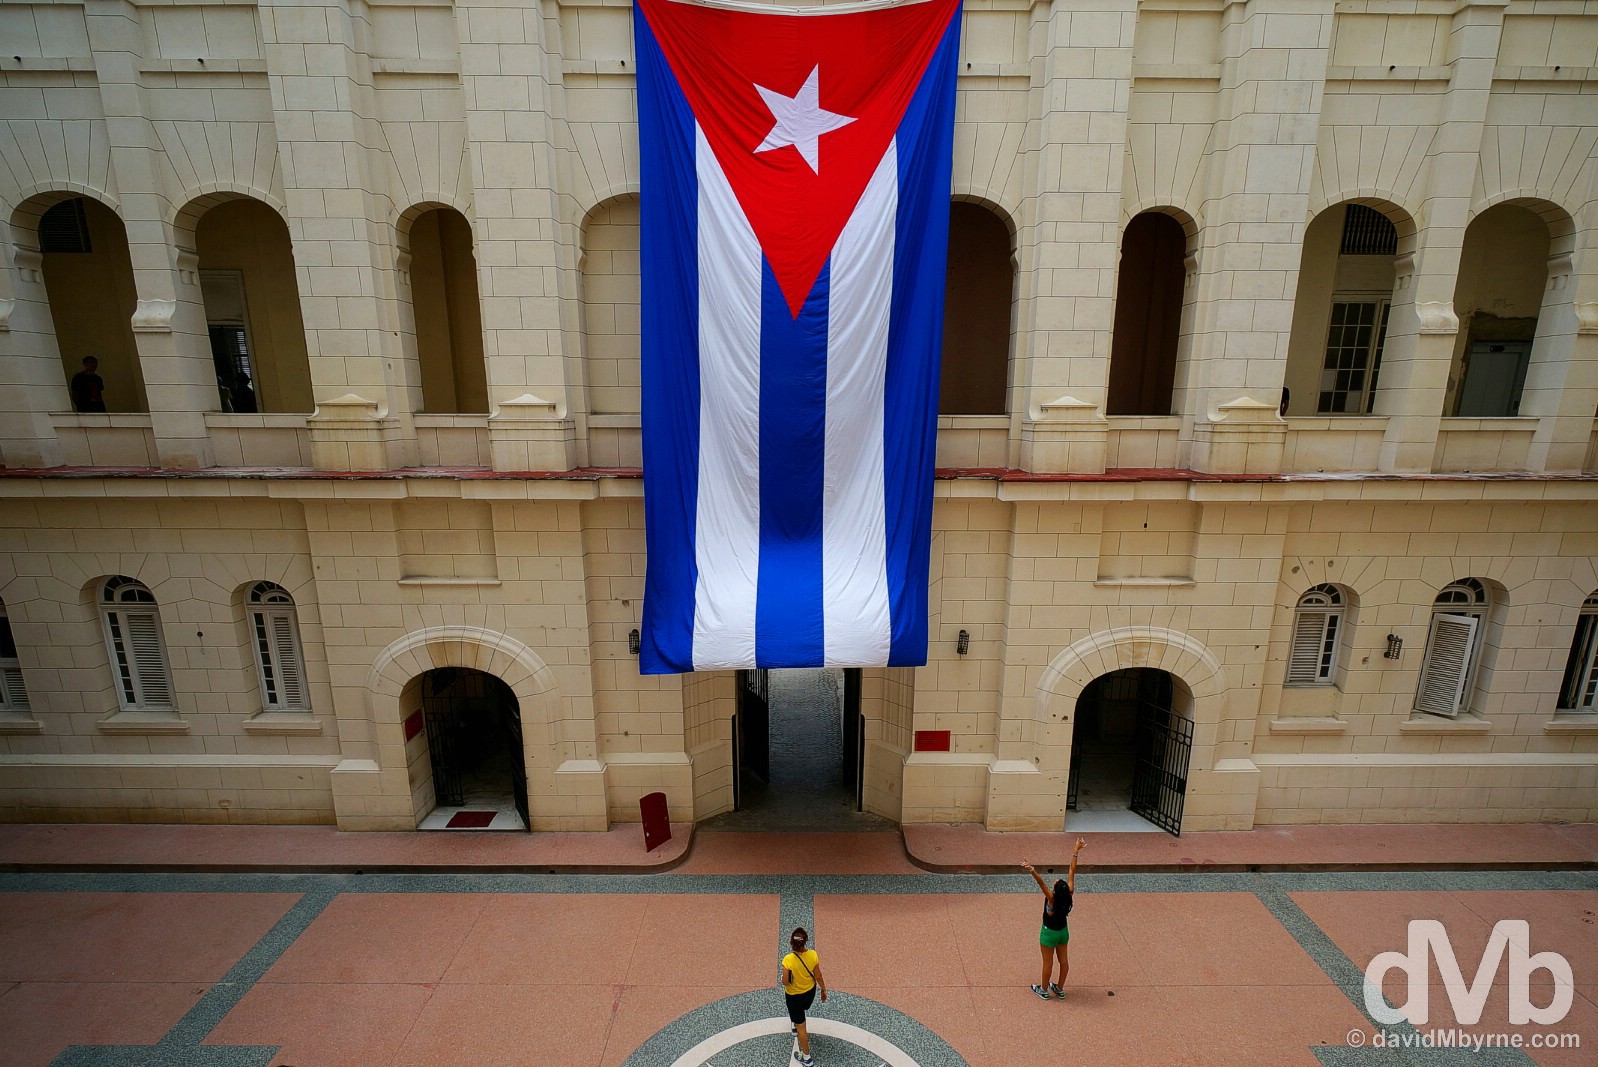 Museo de la Revolucion, The Museum of the Revolution, Havana, Cuba. May 2, 2015.